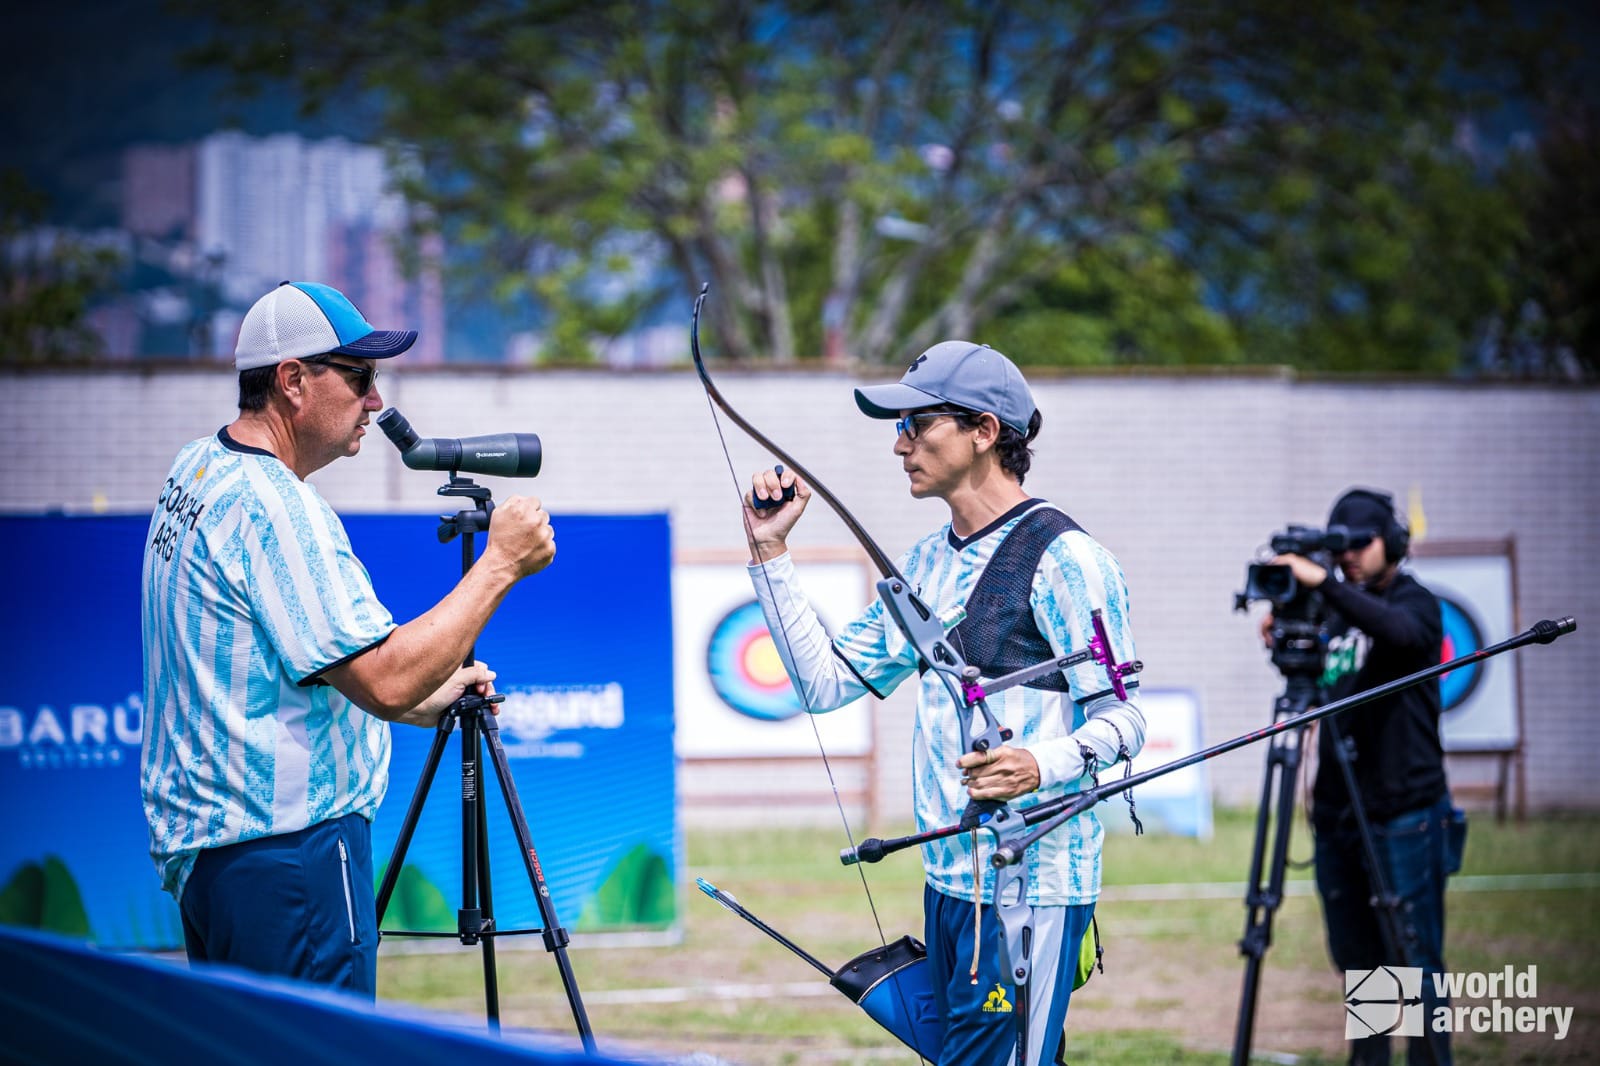 Tiro con arco, otra disciplina que representará Argentina en los Juegos Olímpicos | Canal Showsport